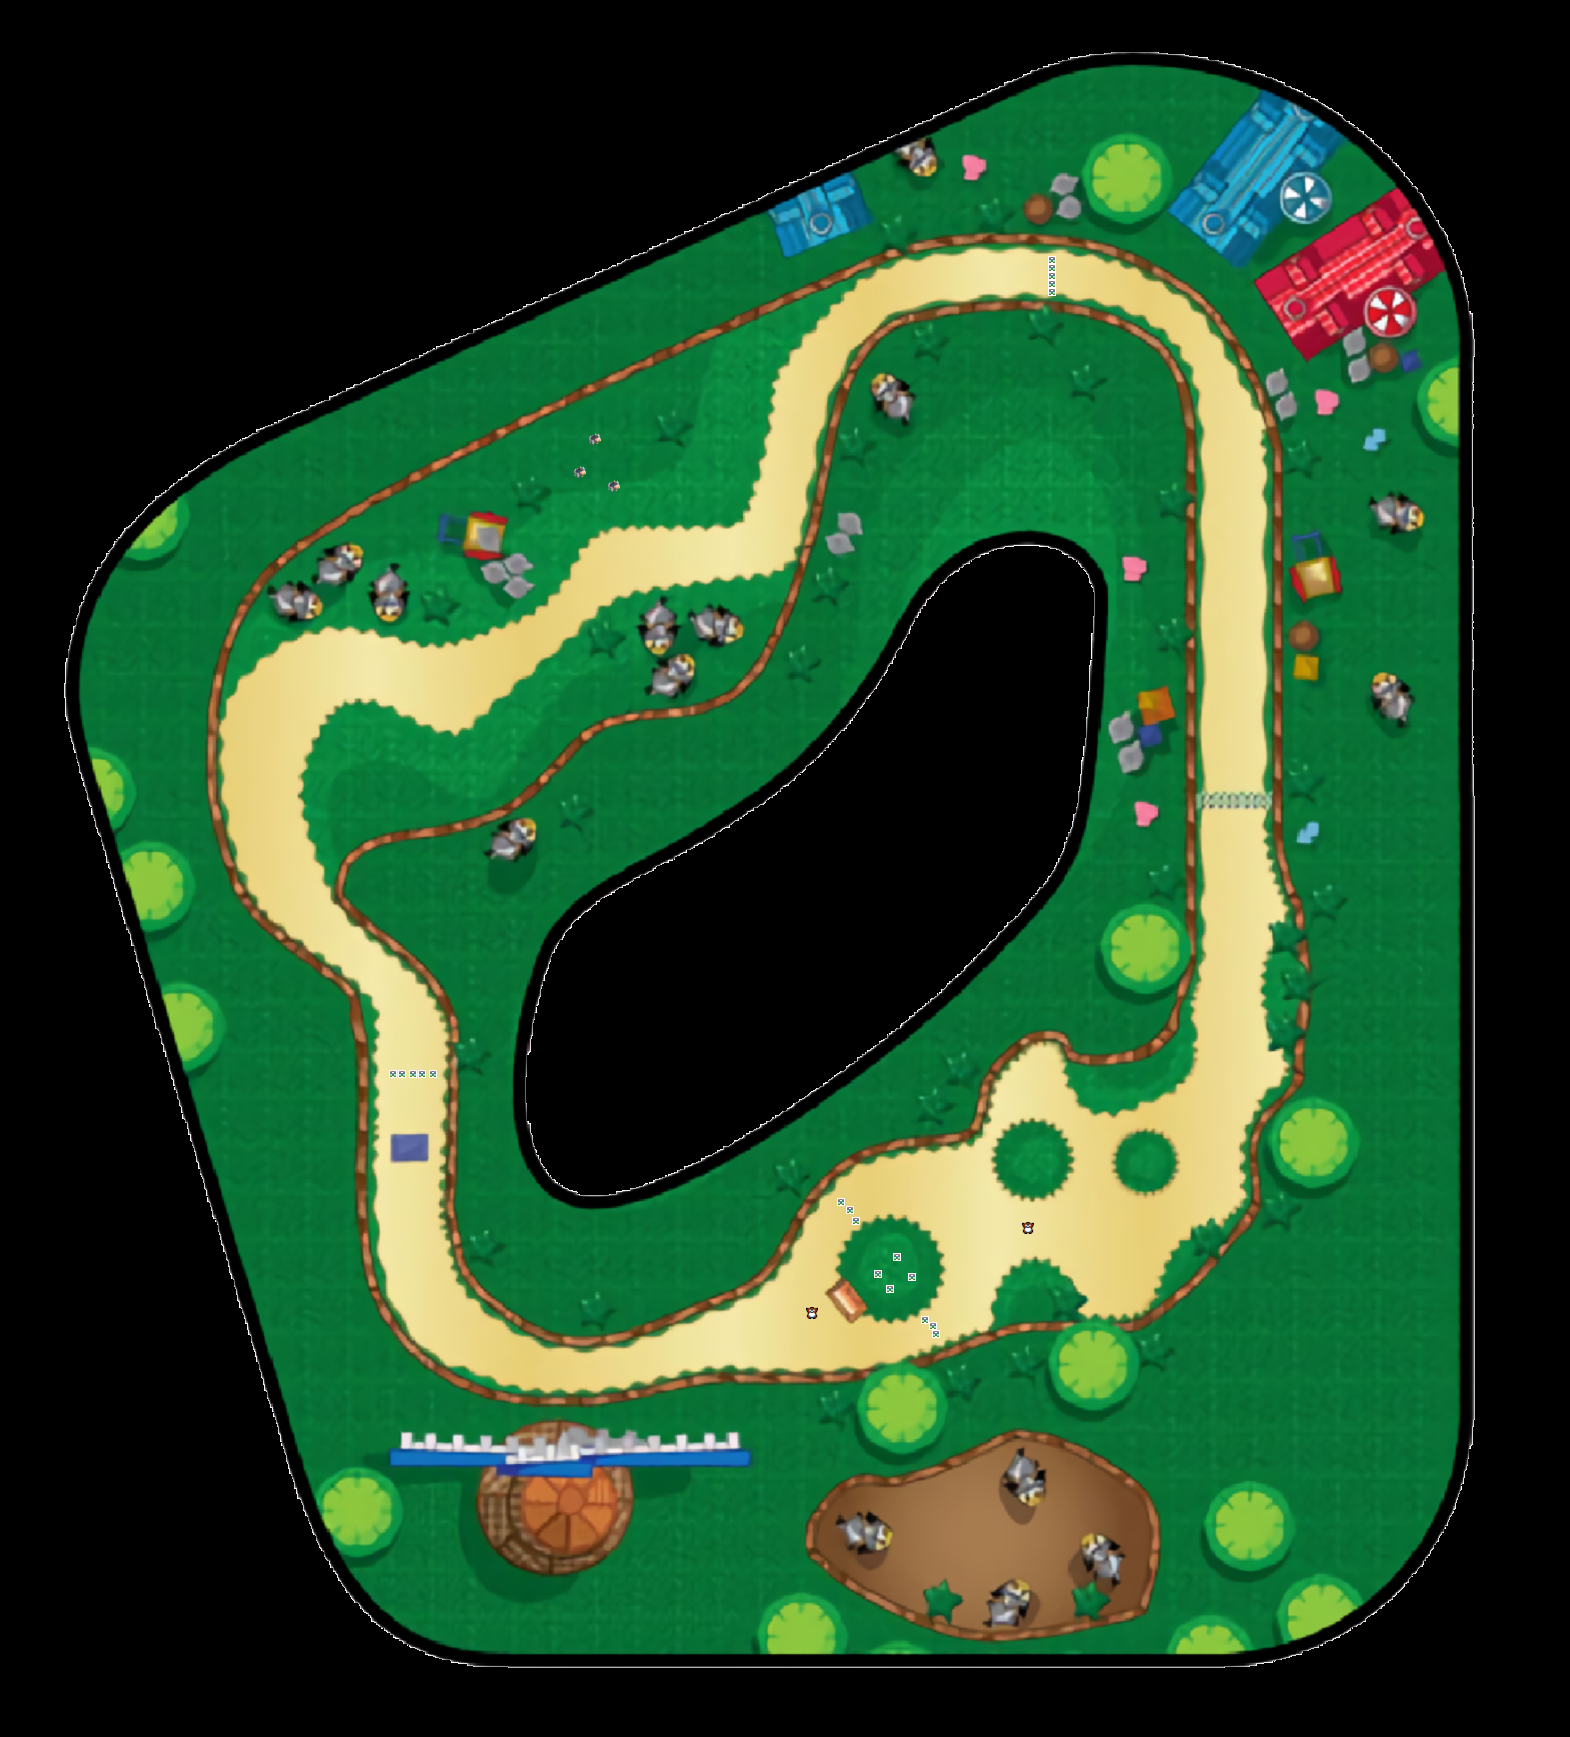 MK8] Wii Moo Moo Meadows [FULL VERSION] - Map Info » TrackmaniaExchange